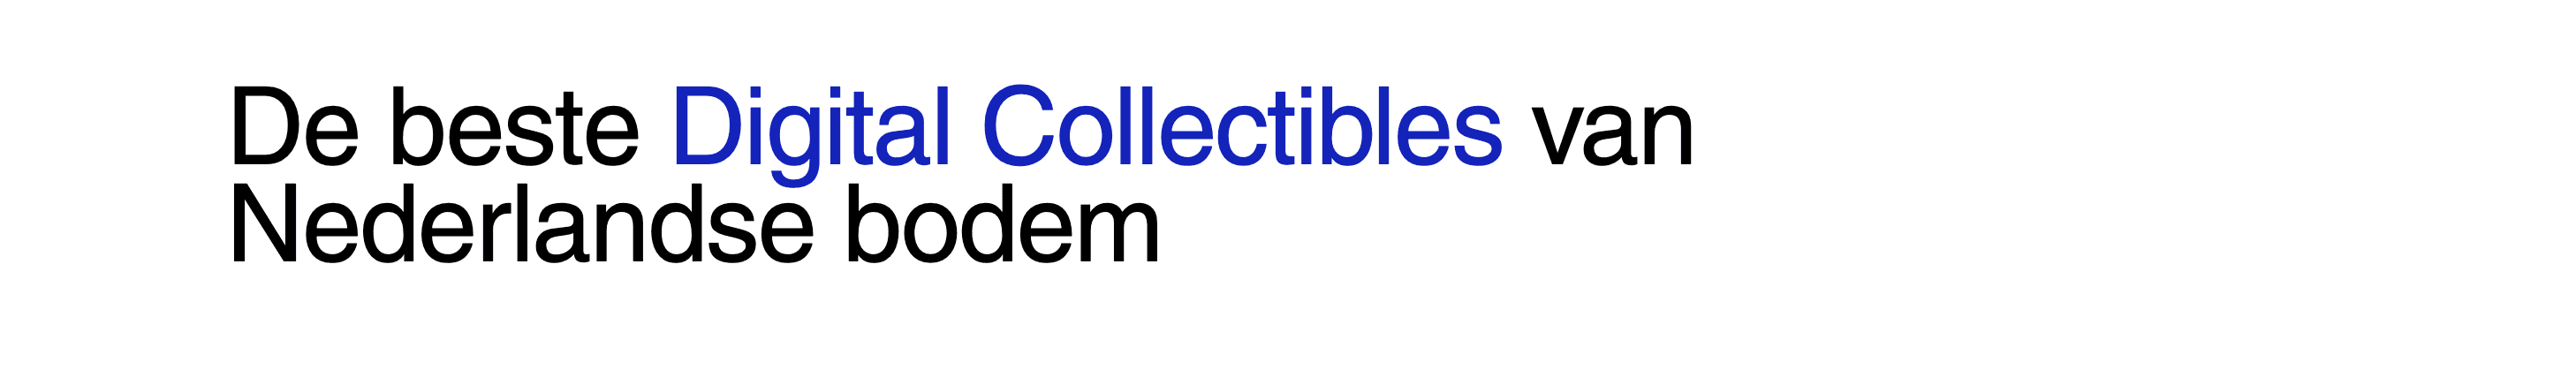 Dutch_Digital_Collectibles banner